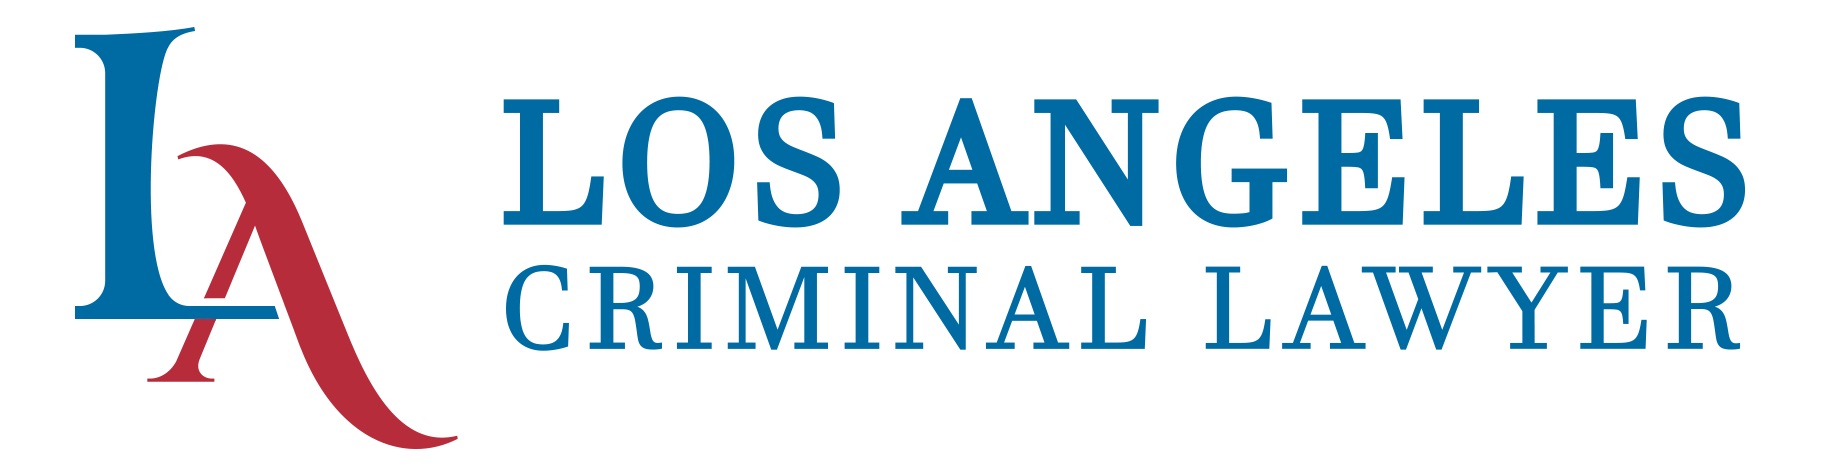 Los Angeles Criminal Lawyer's Logo